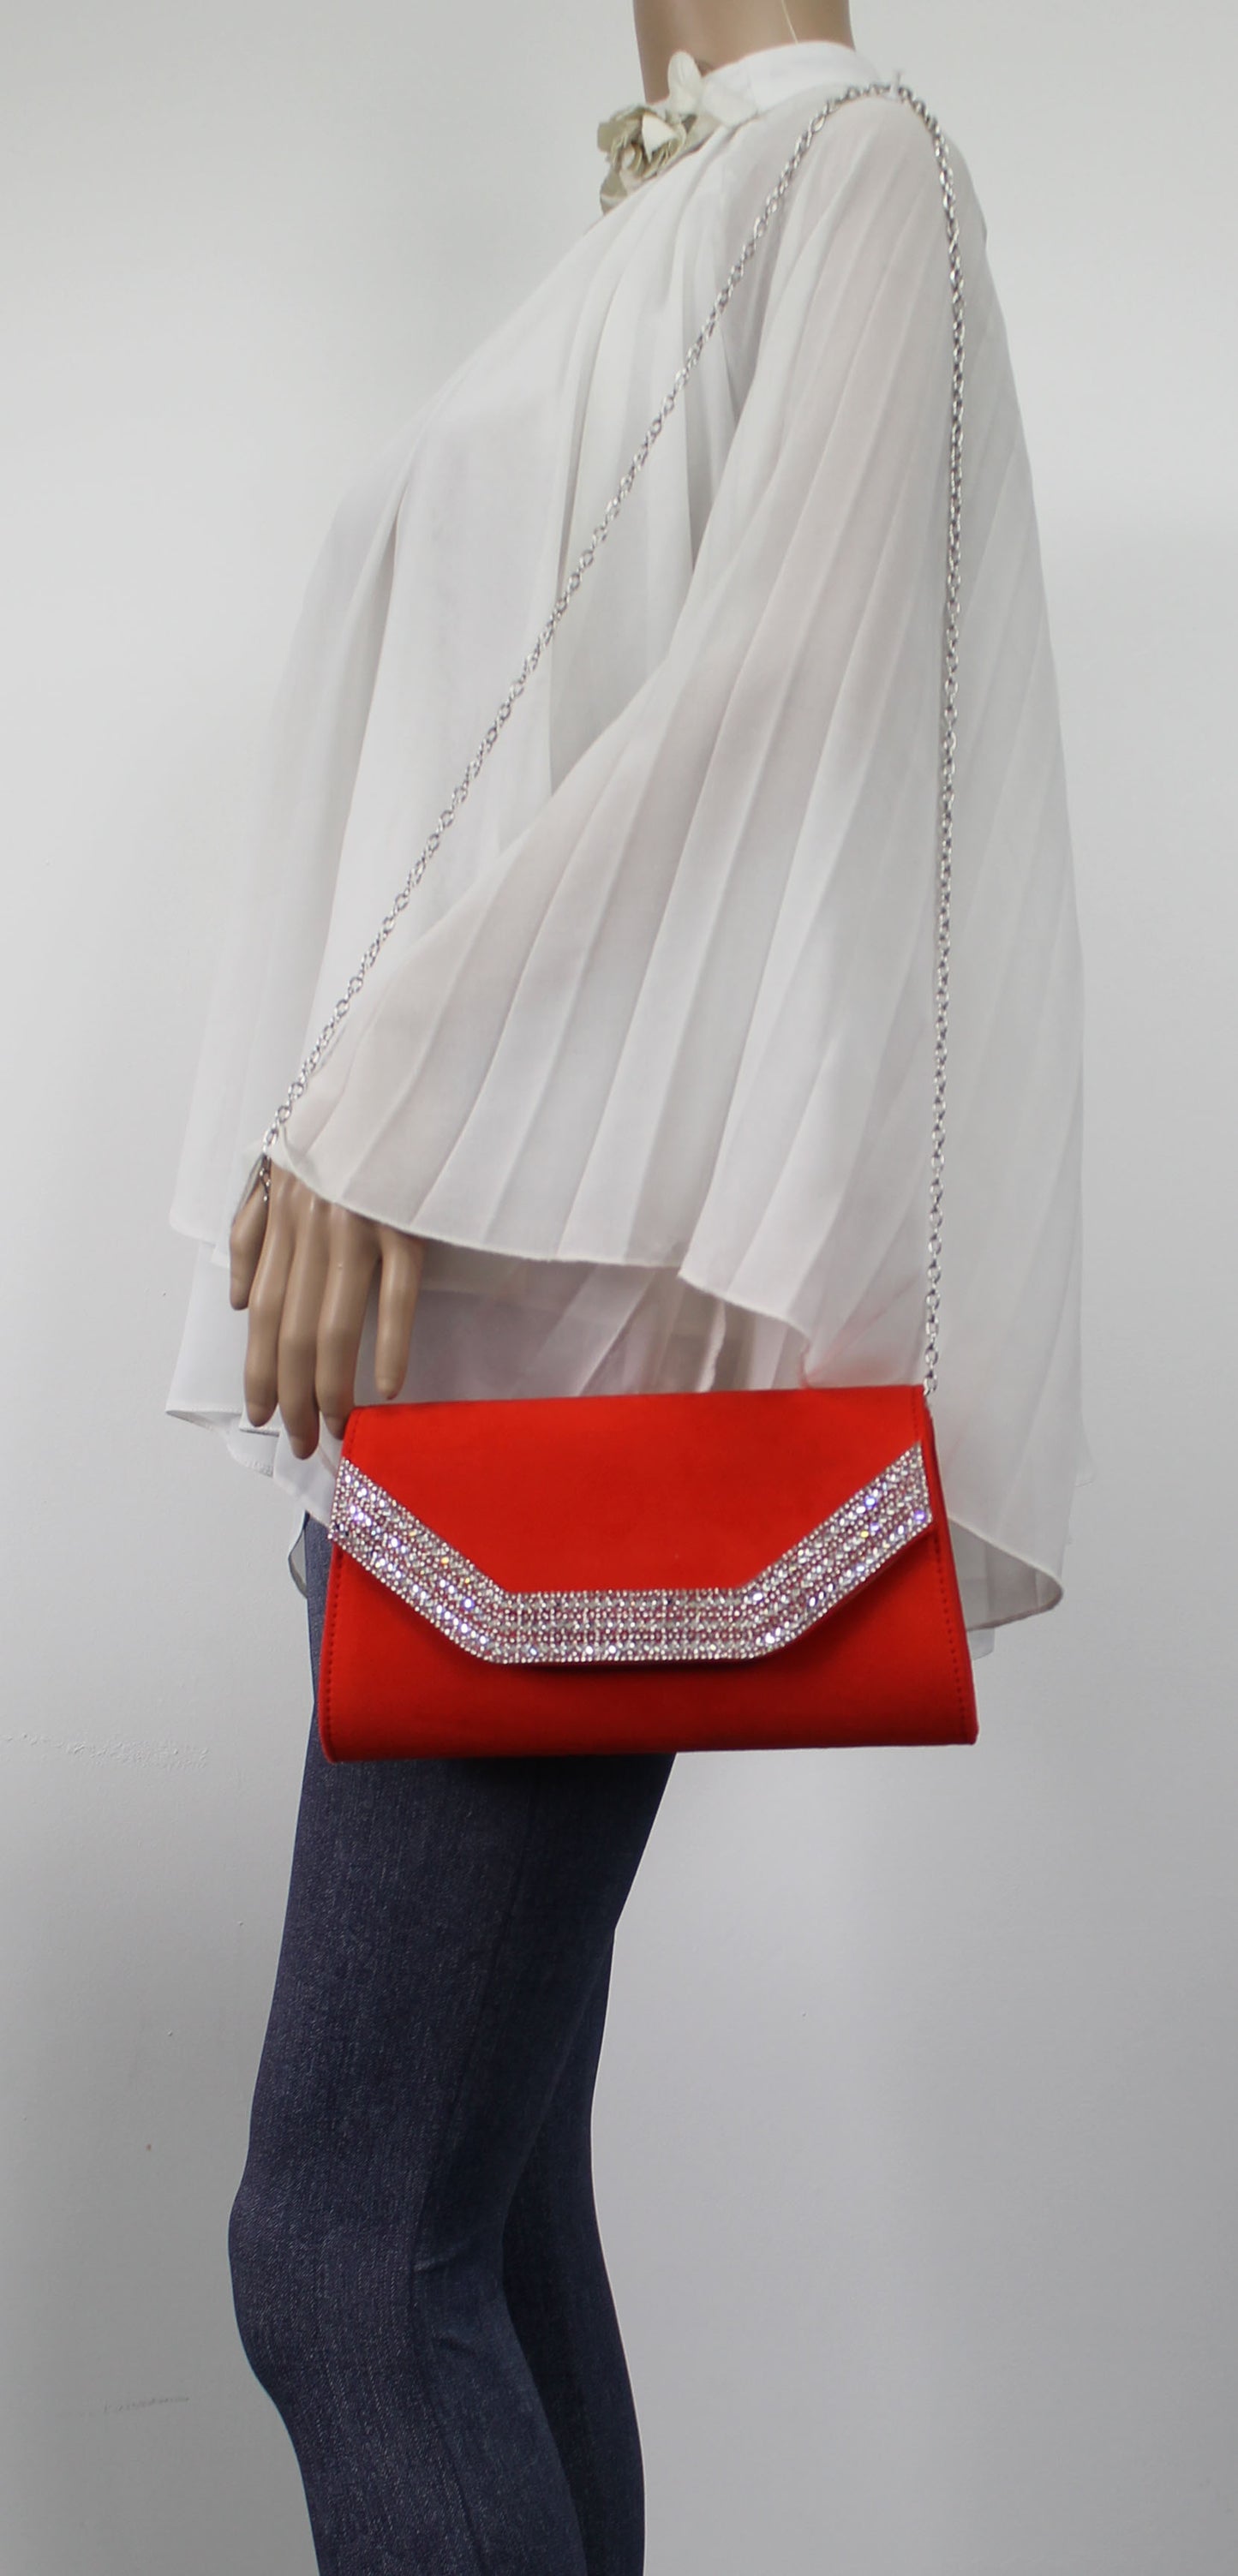 SWANKYSWANS Harper Clutch Bag Scarlet Cute Cheap Clutch Bag For Weddings School and Work